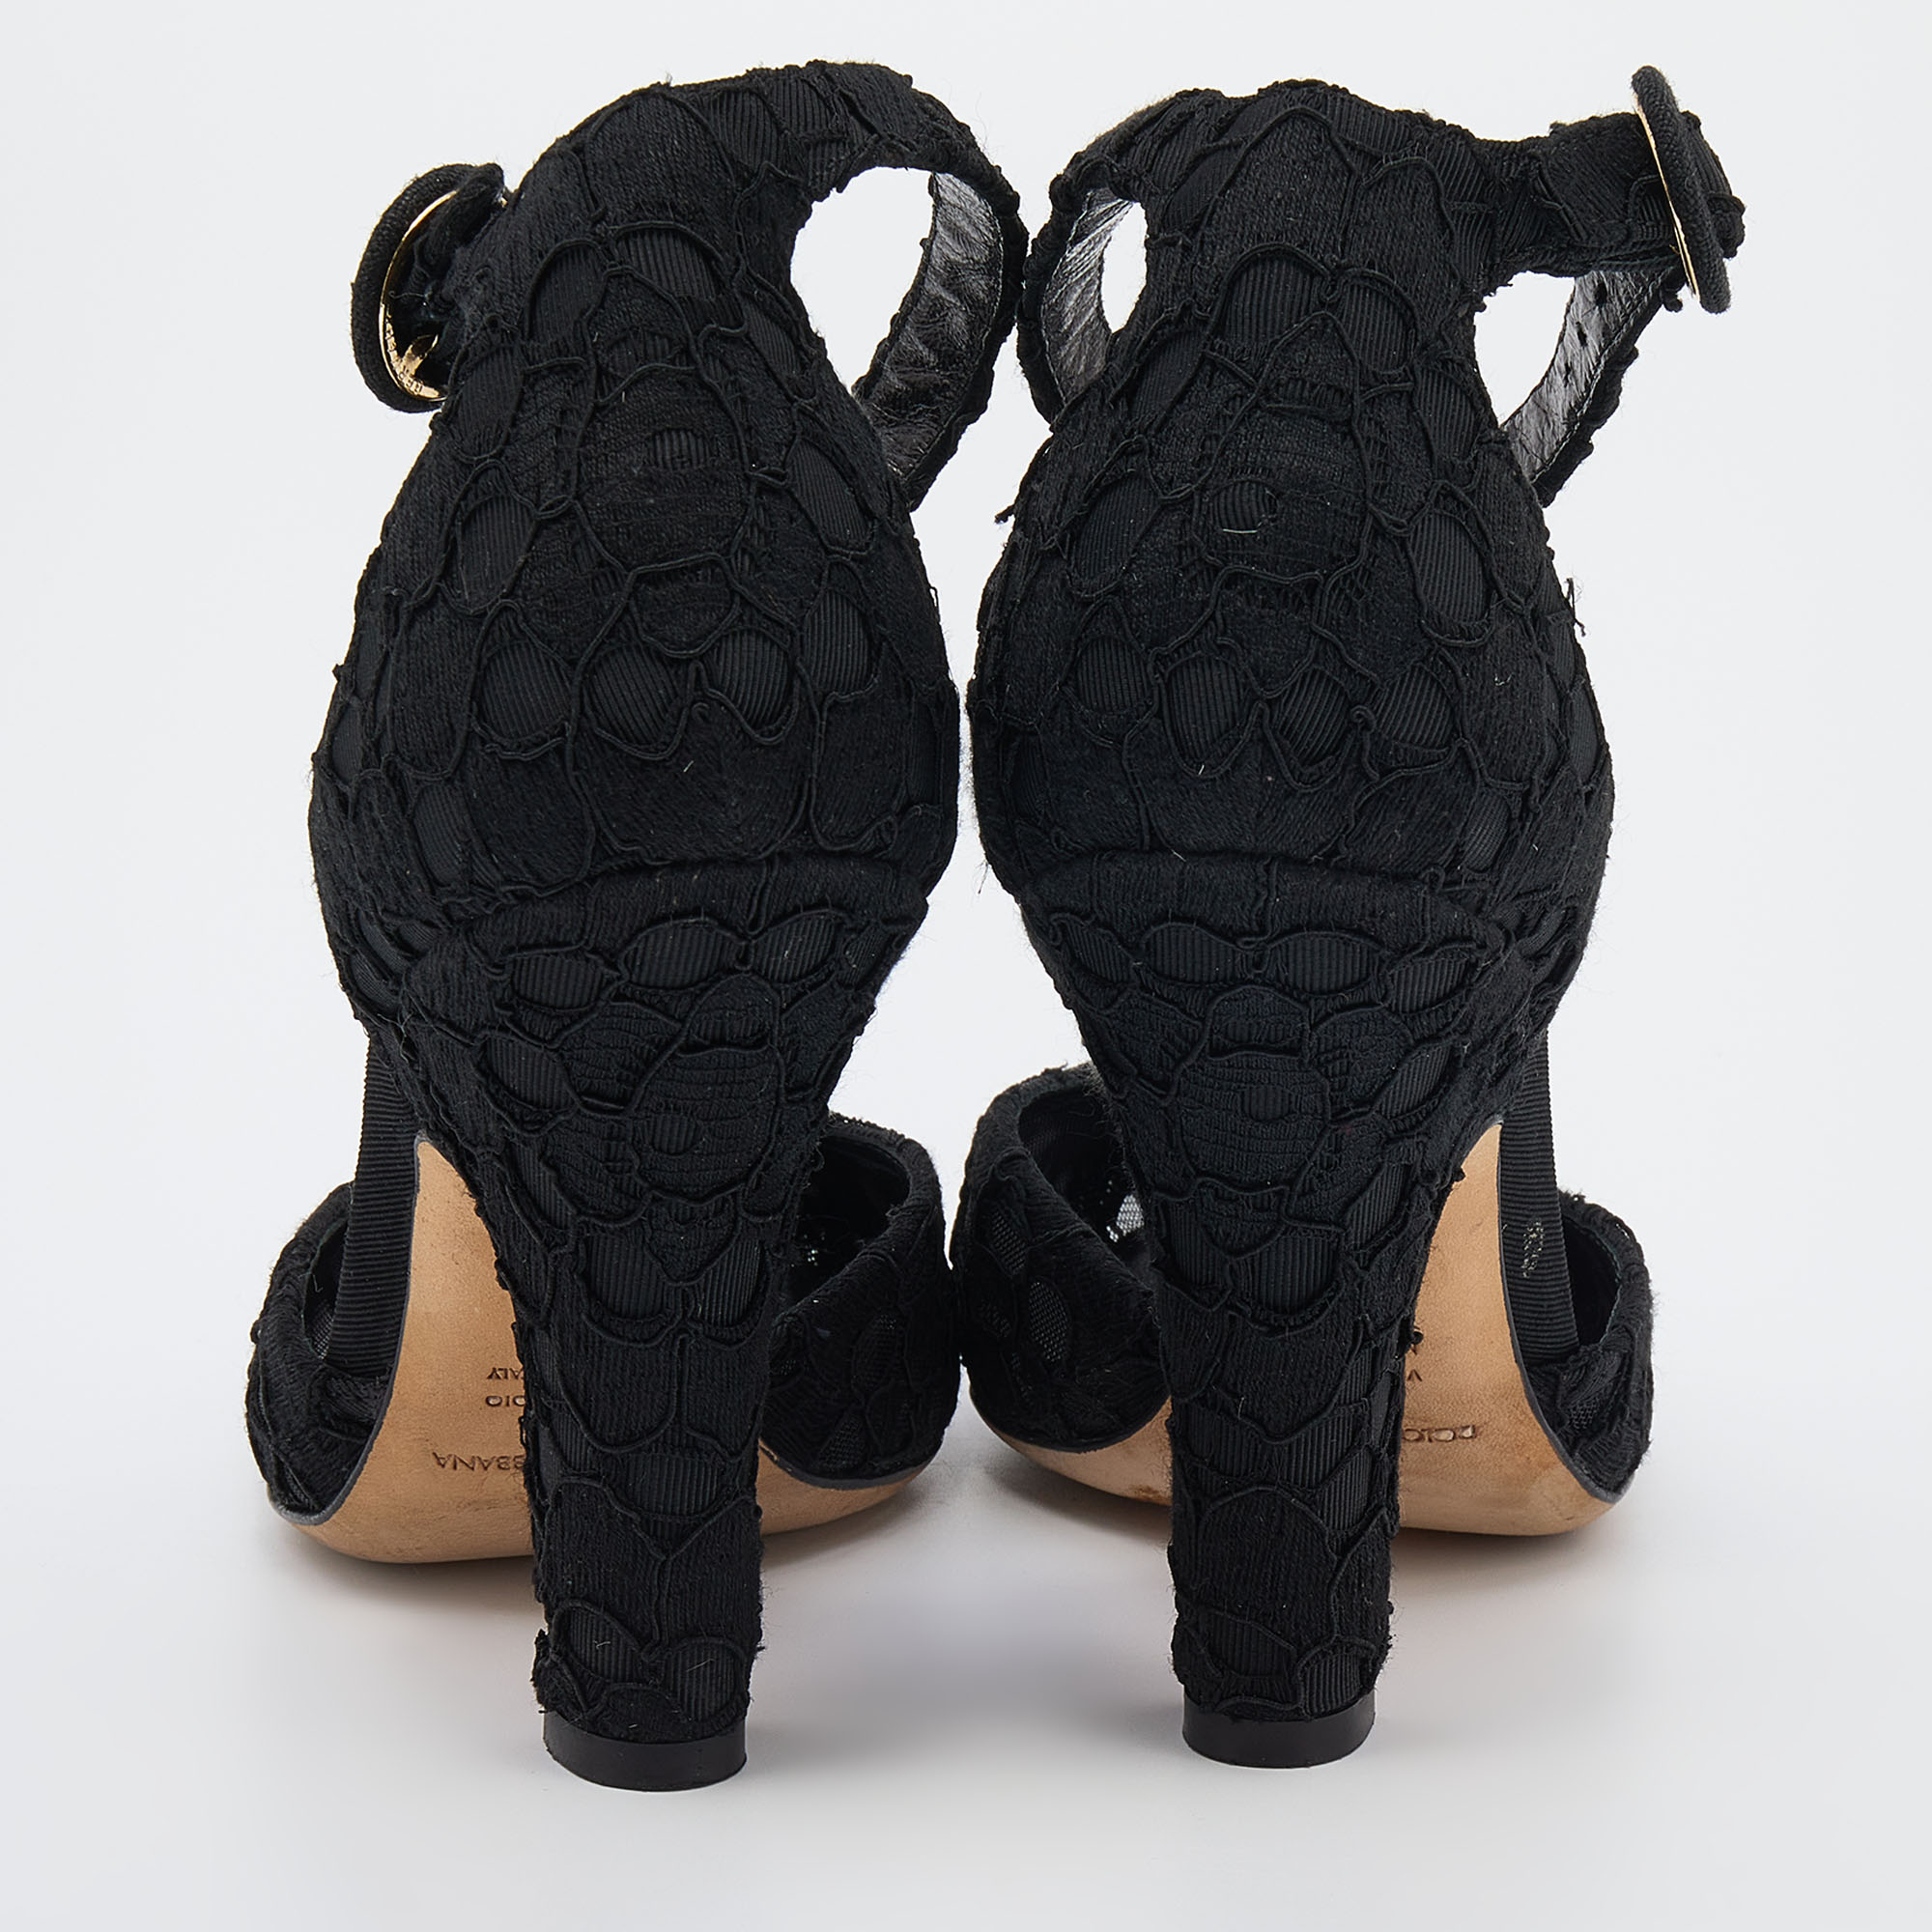 Dolce & Gabbana Black Lace Ankle Strap Sandals Size 36